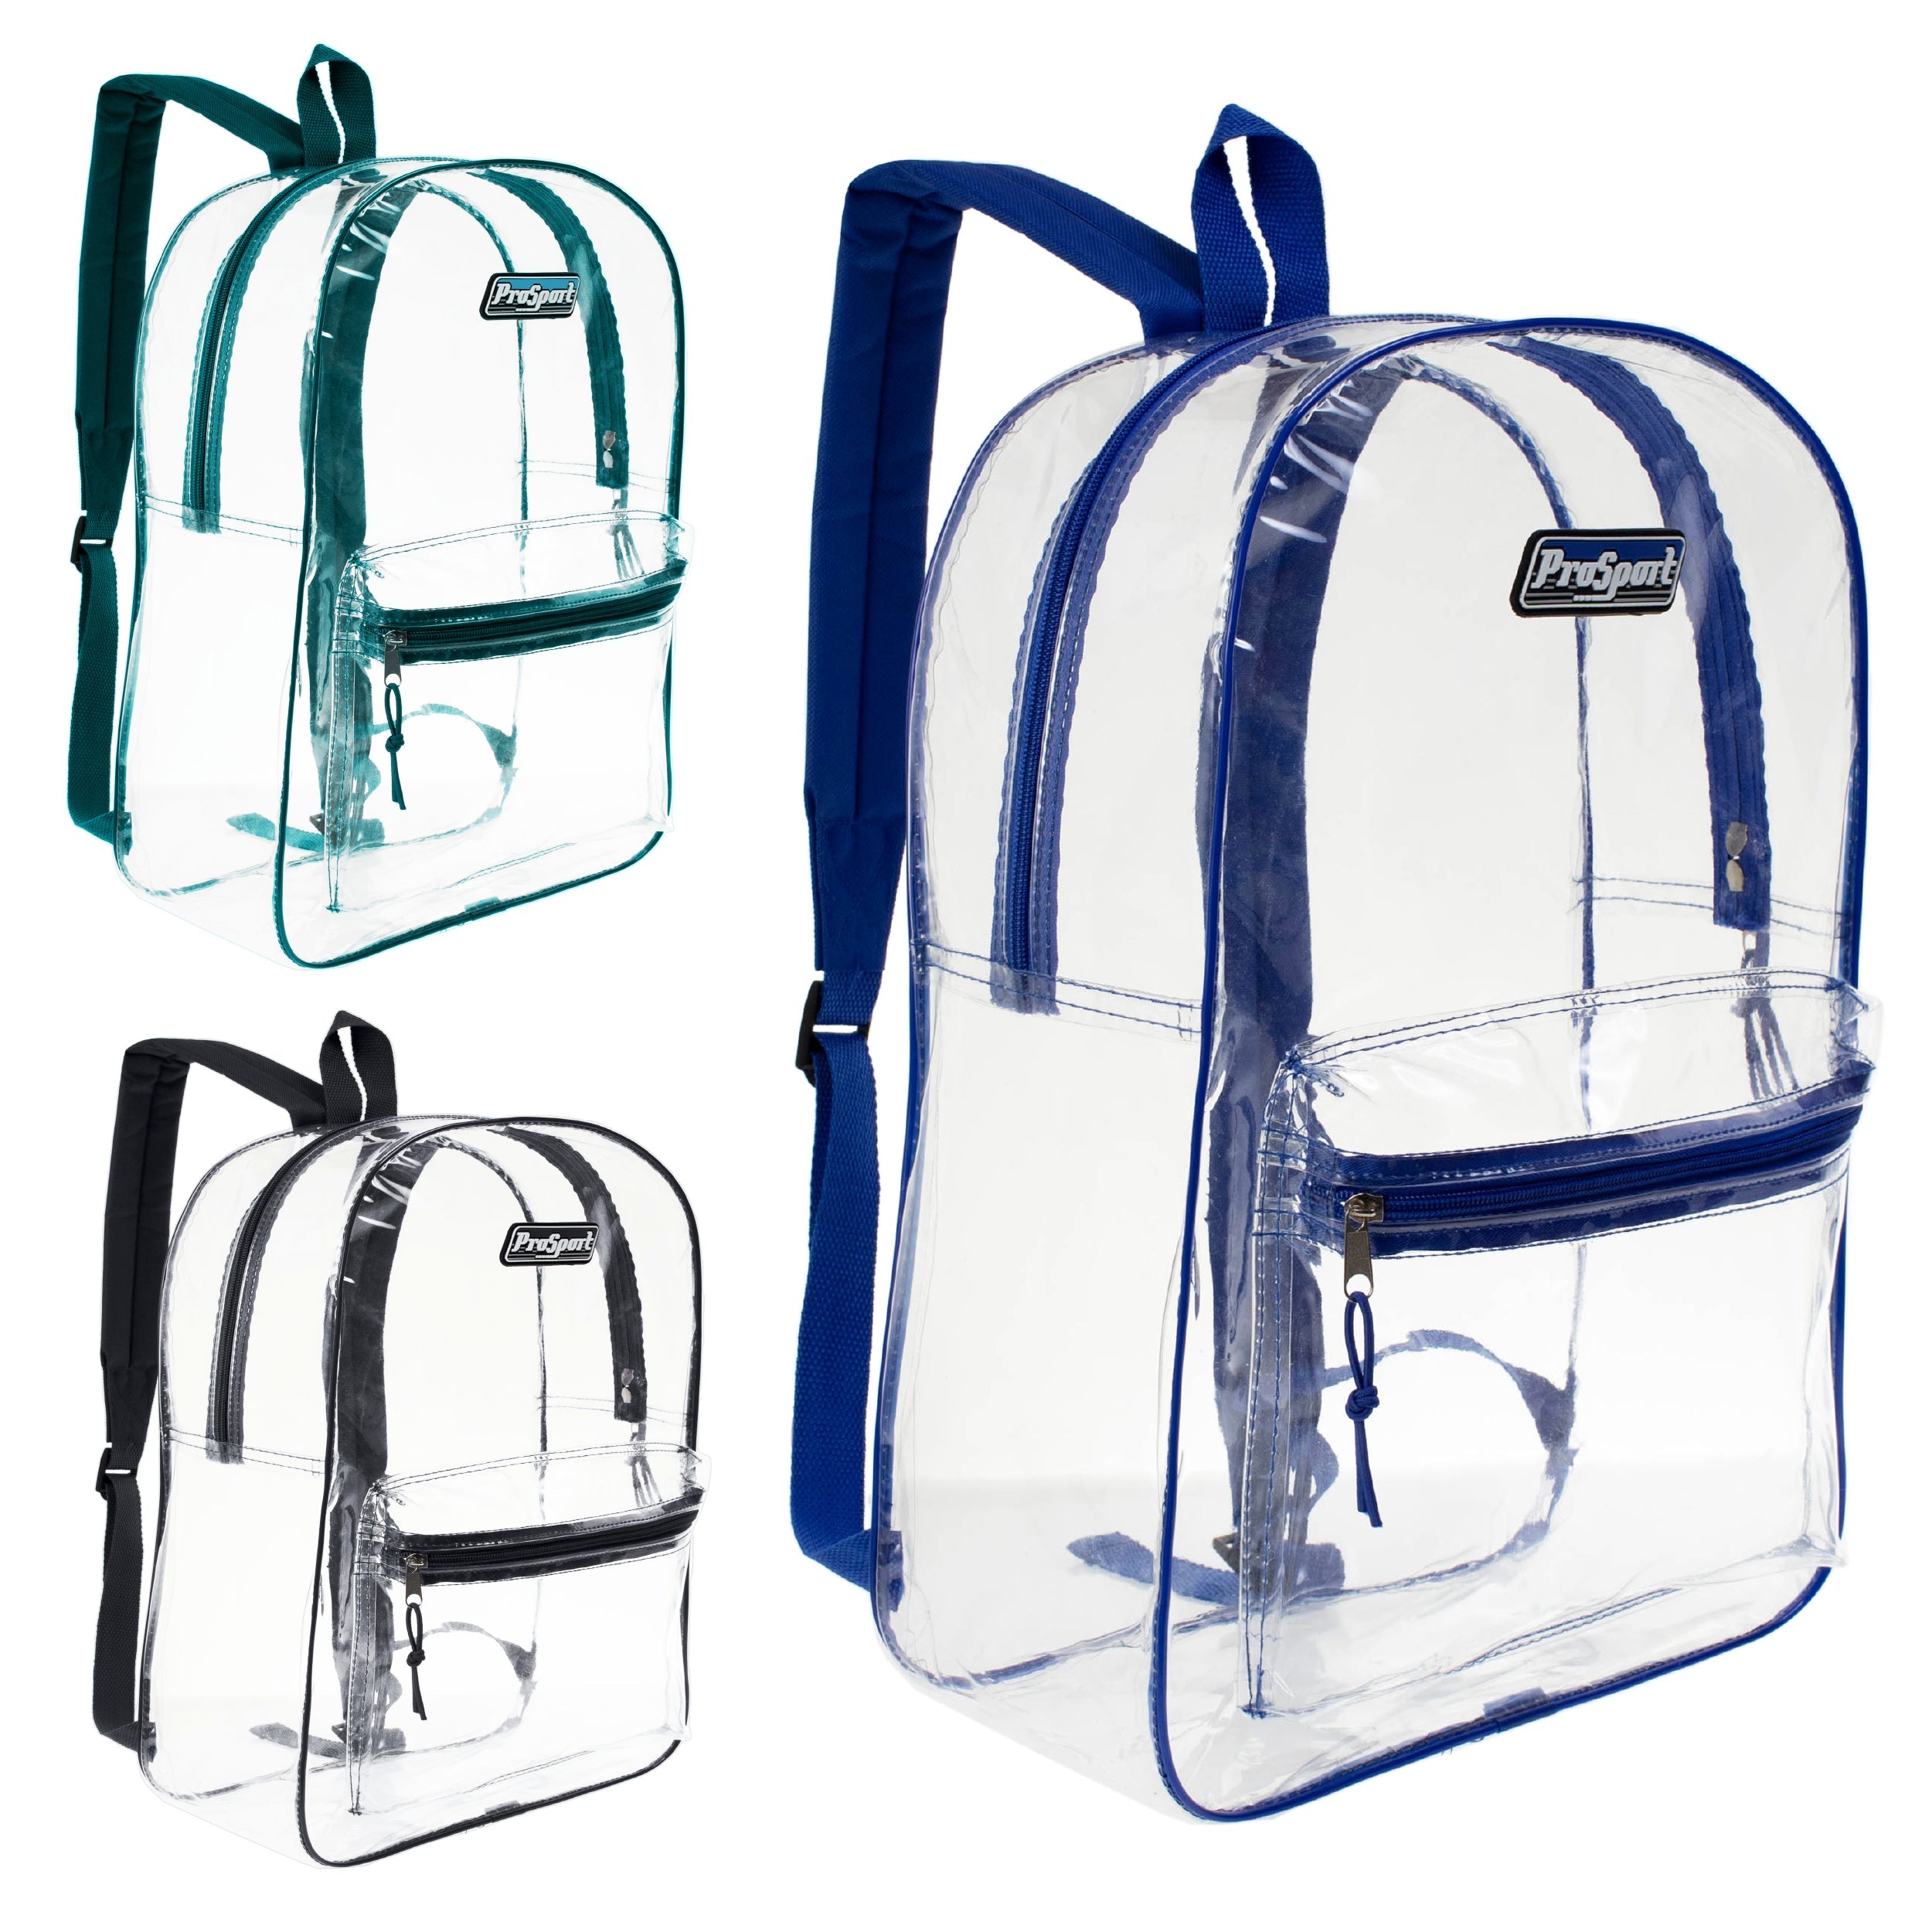 Buy 17" Transparent Wholesale Backpack in Assorted Color - Bulk Case of 24